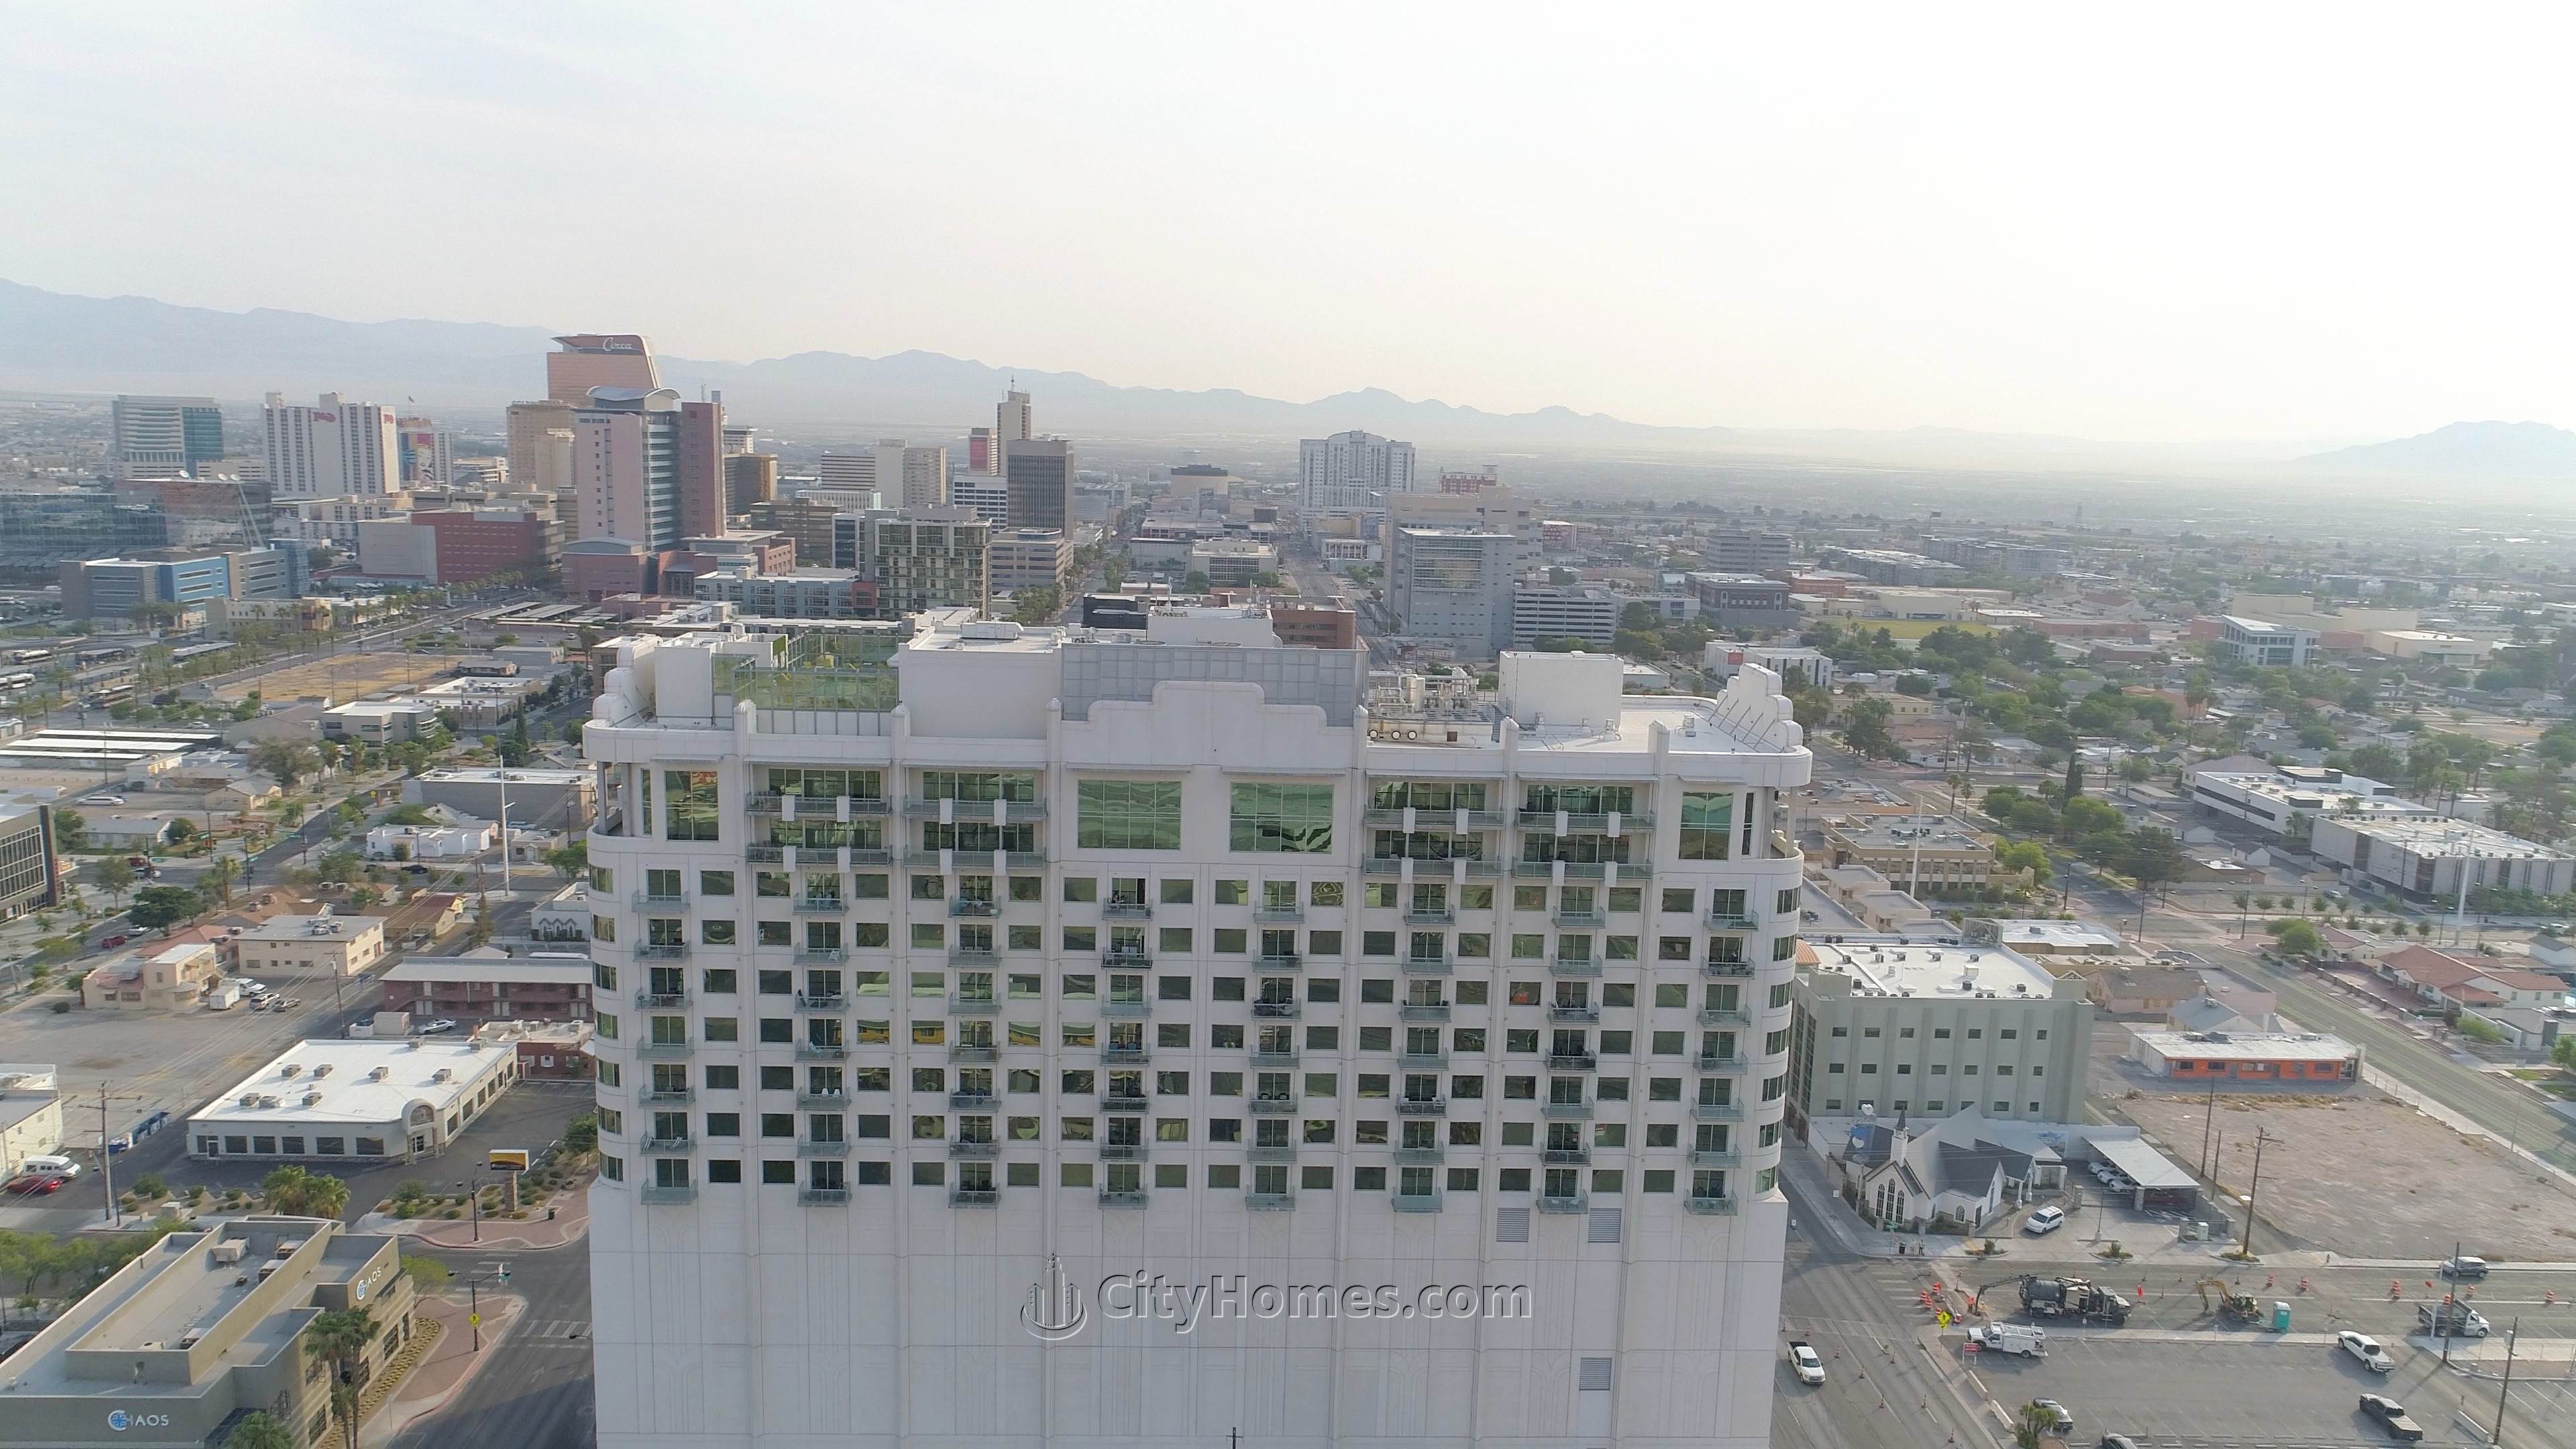 5. Soho Lofts building at 900 S Las Vegas Blvd, Las Vegas, NV 89101